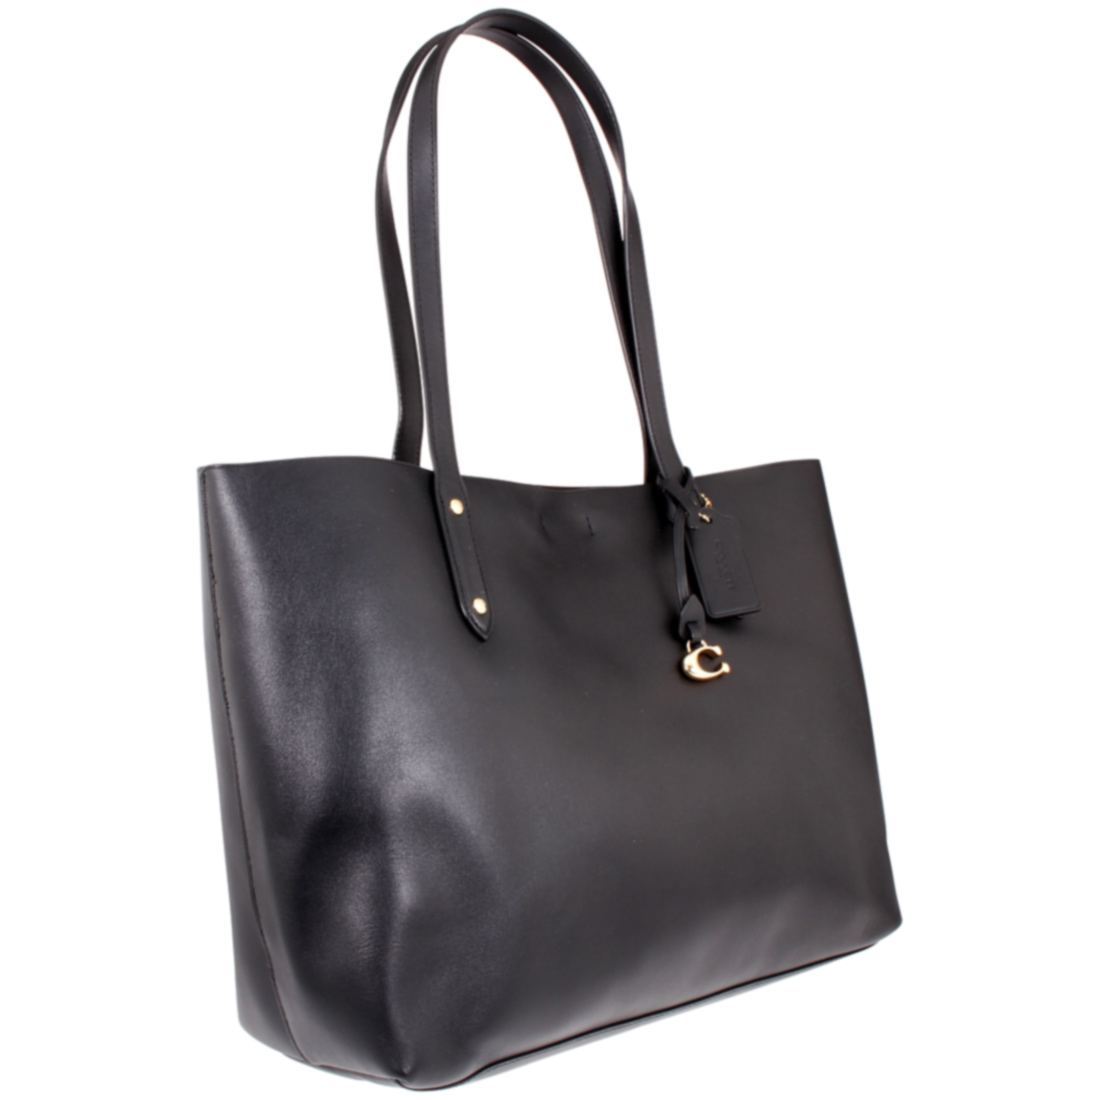 Coach Central Ladies Large Black Leather Tote Bag 69450GDBLK | eBay